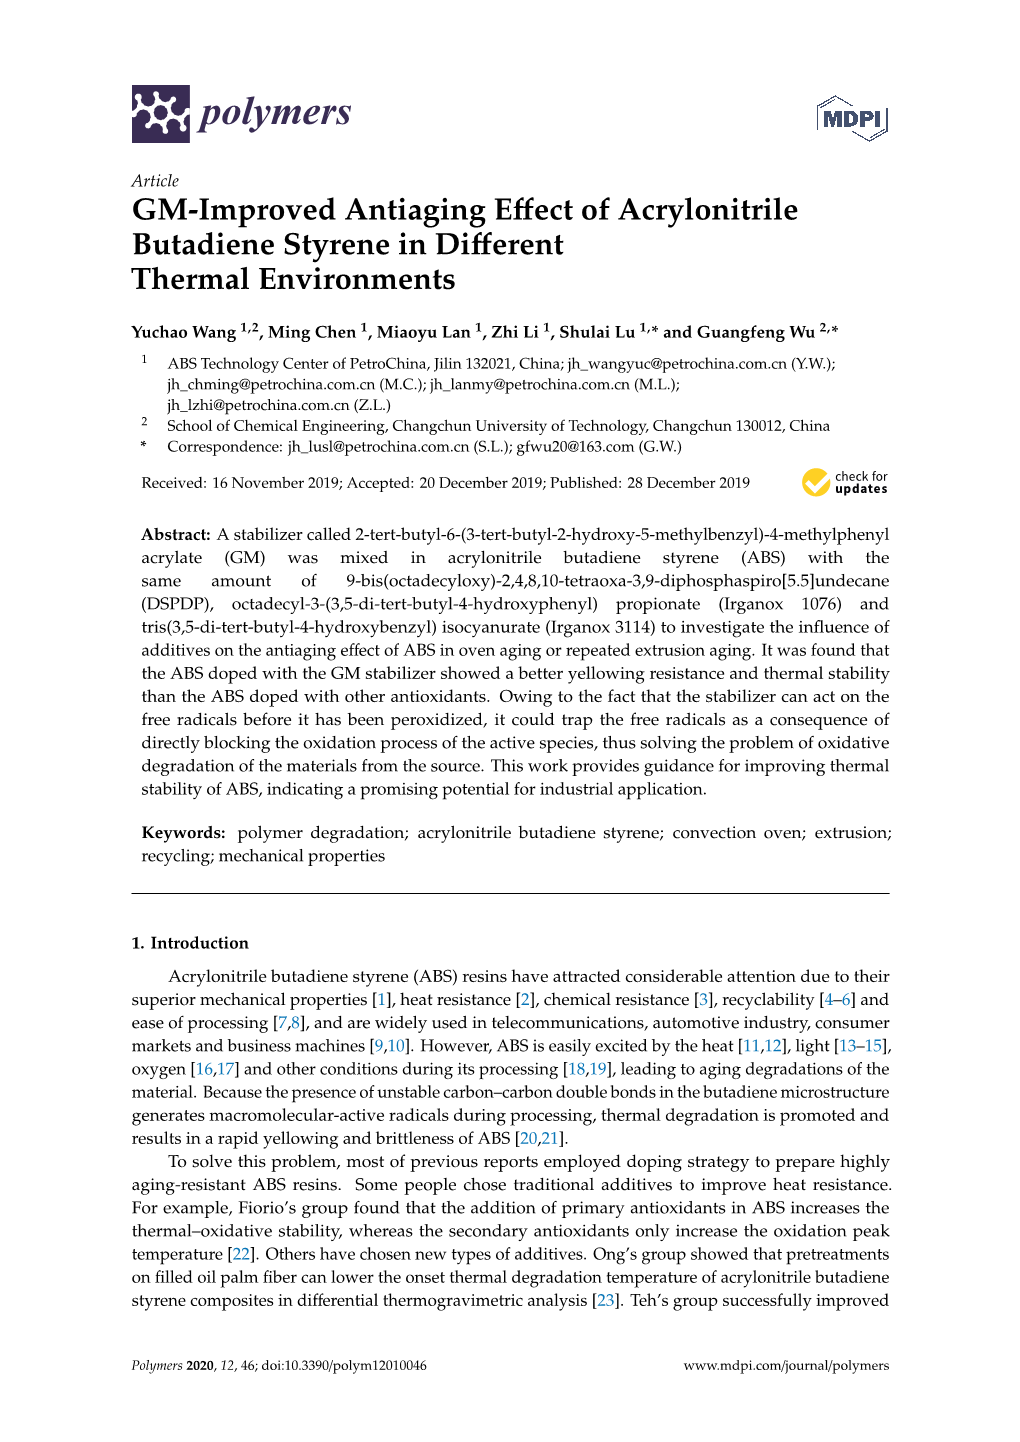 GM-Improved Antiaging Effect of Acrylonitrile Butadiene Styrene In